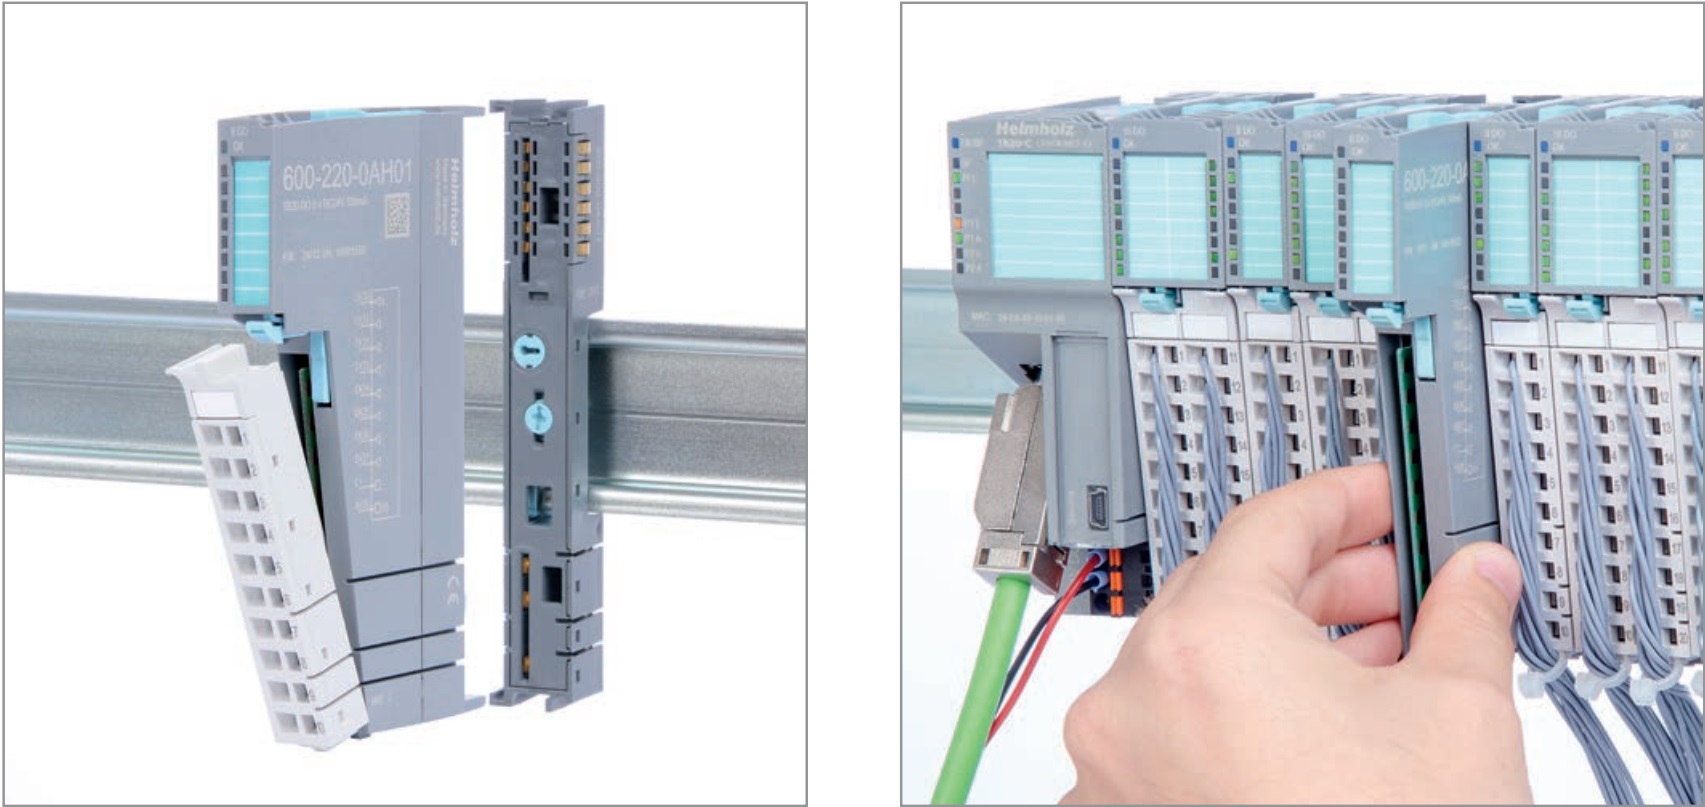 Digital Input Module 16DI 600-210-0AP21 hotplug